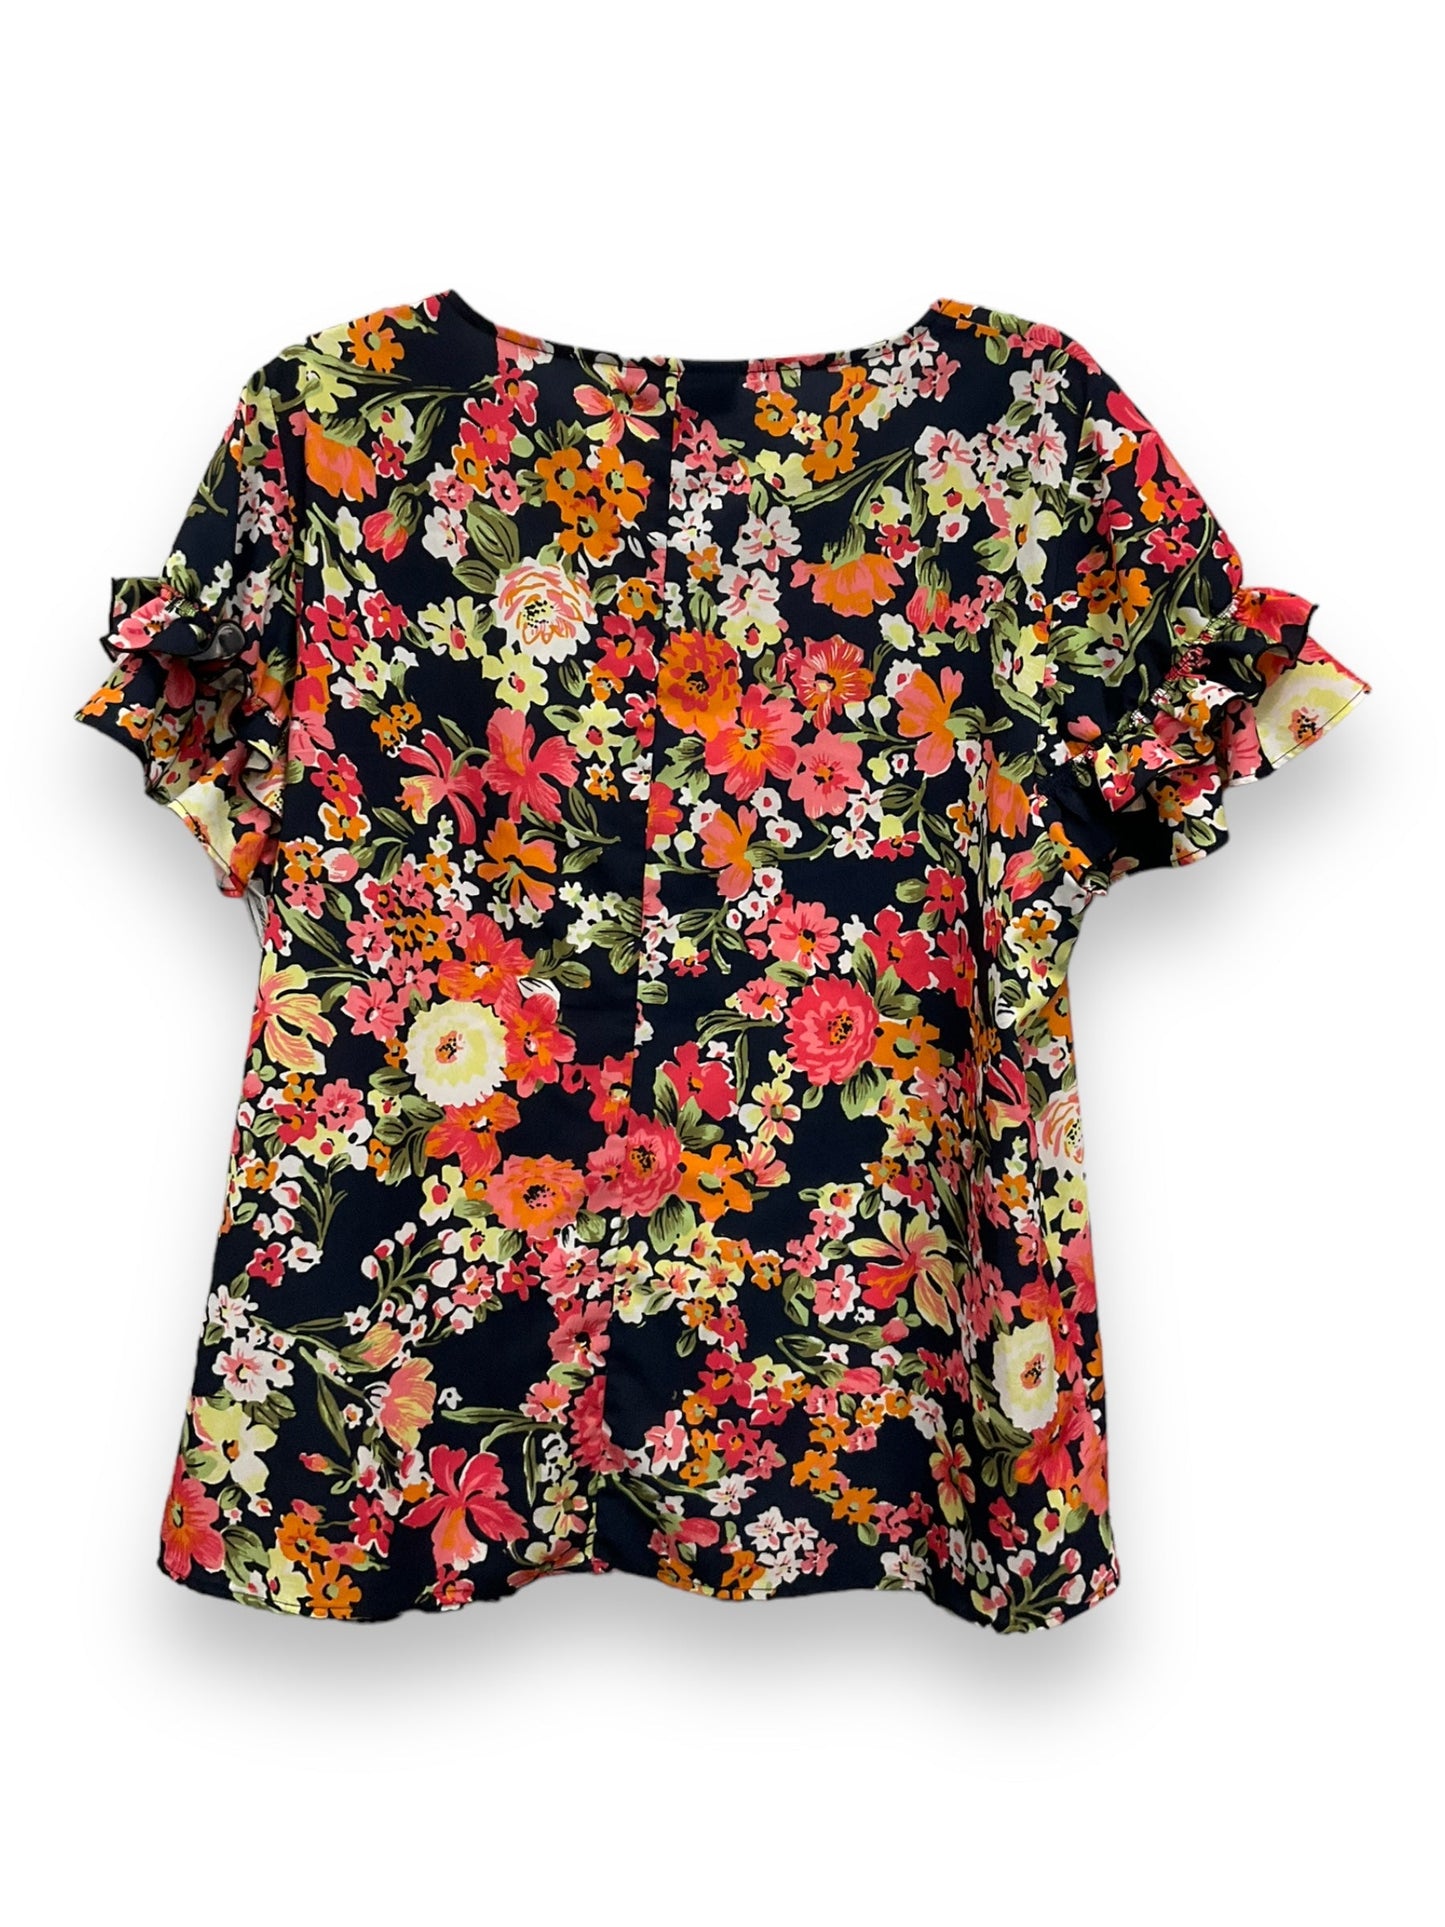 Floral Print Top Short Sleeve Lane Bryant, Size 2x